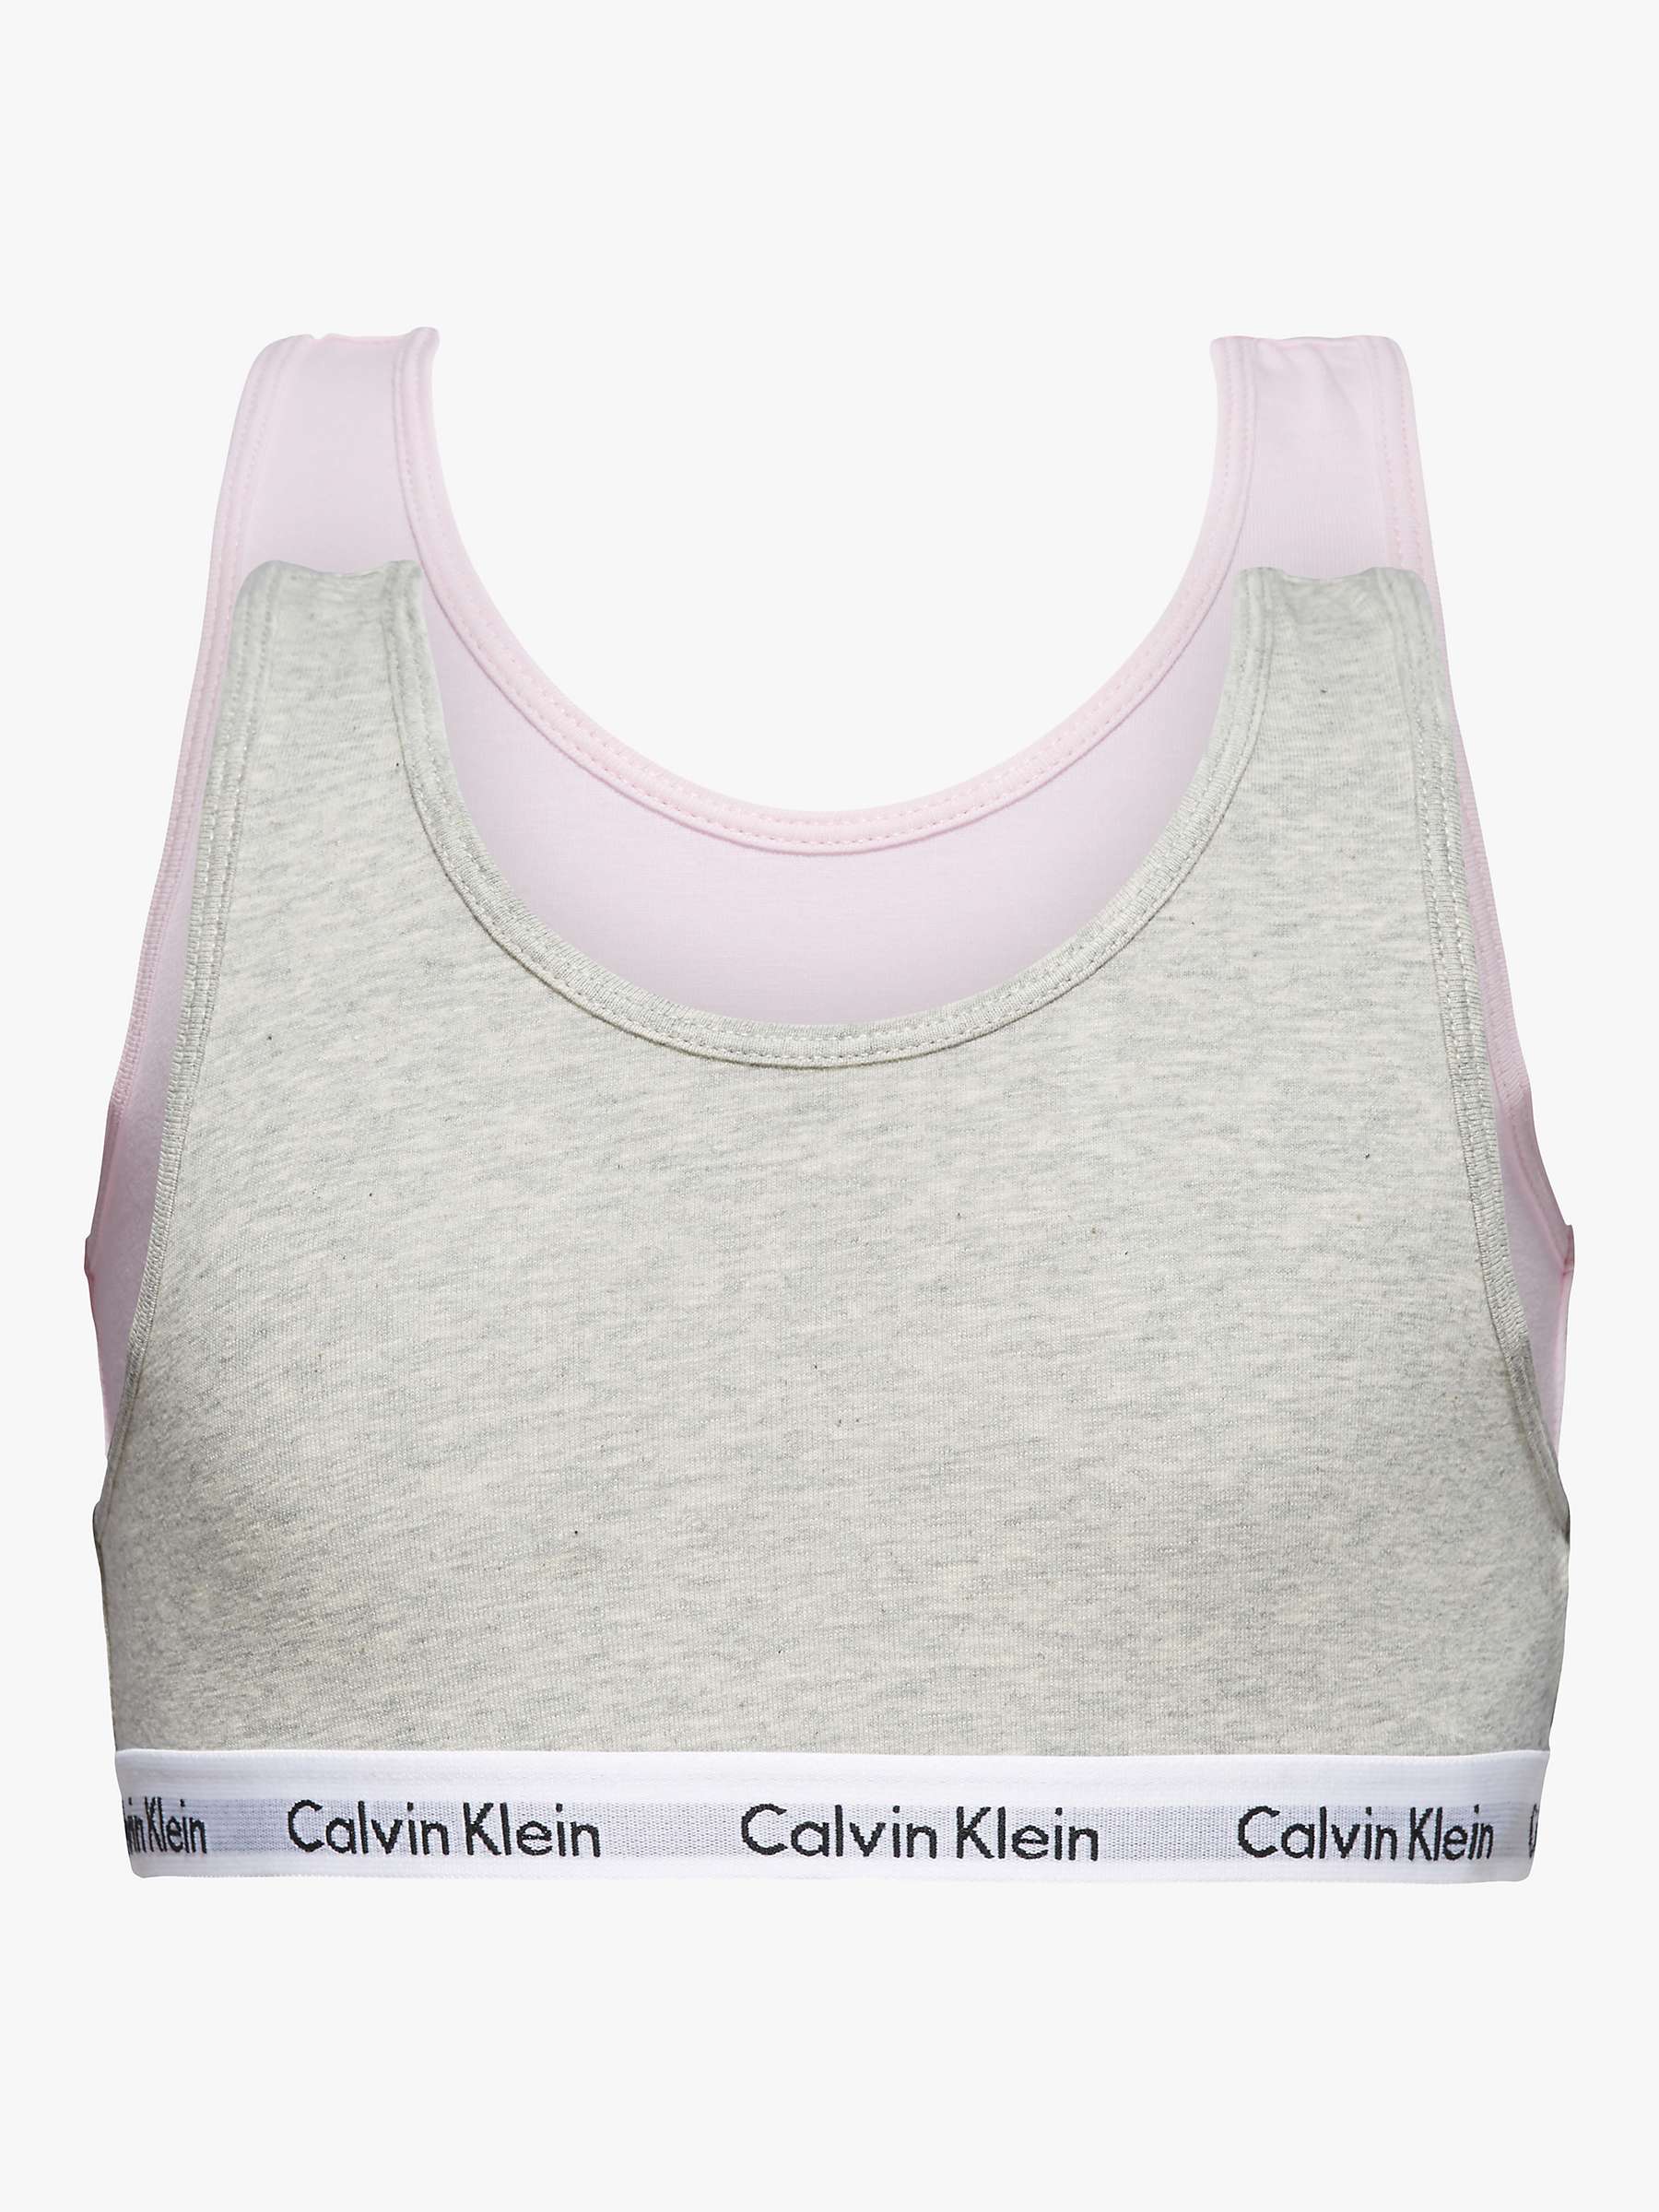 Buy Calvin Klein Kids' Bralette, Pack of 2, Grey Heather/Unique Online at johnlewis.com